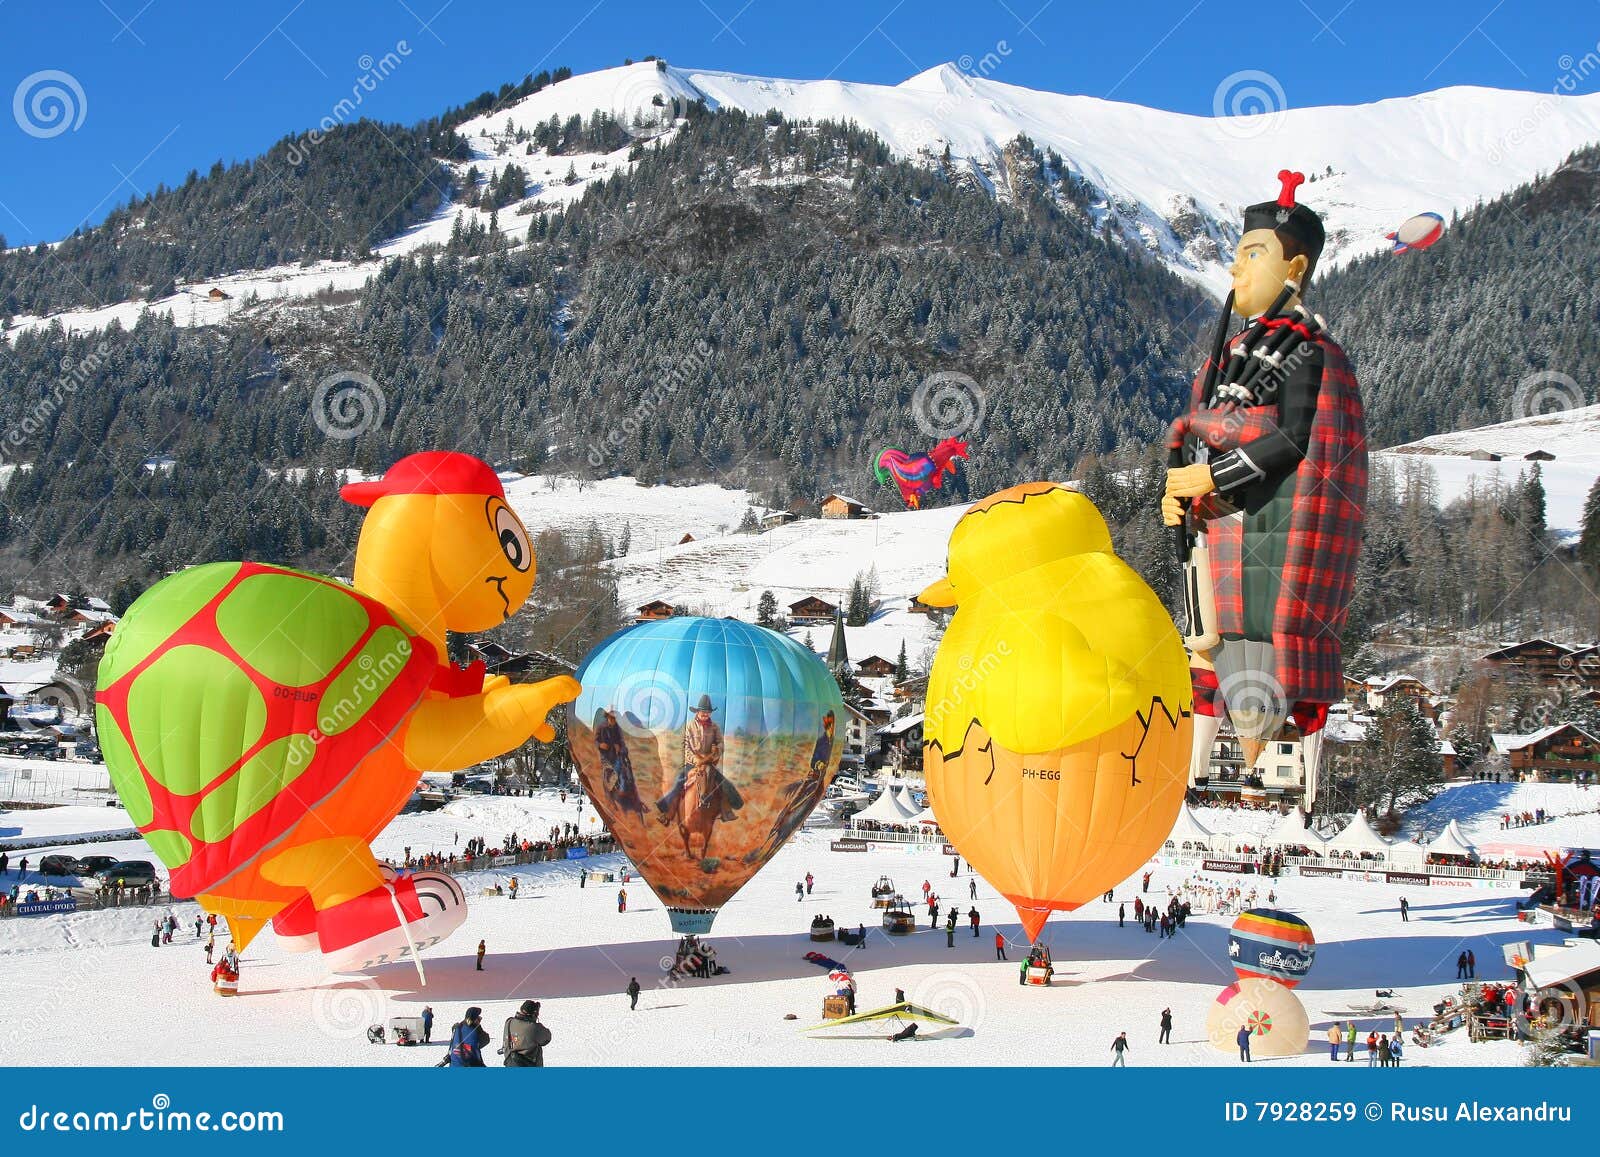 [Image: baloon-festival-chateau-d-oex-switzerland-7928259.jpg]